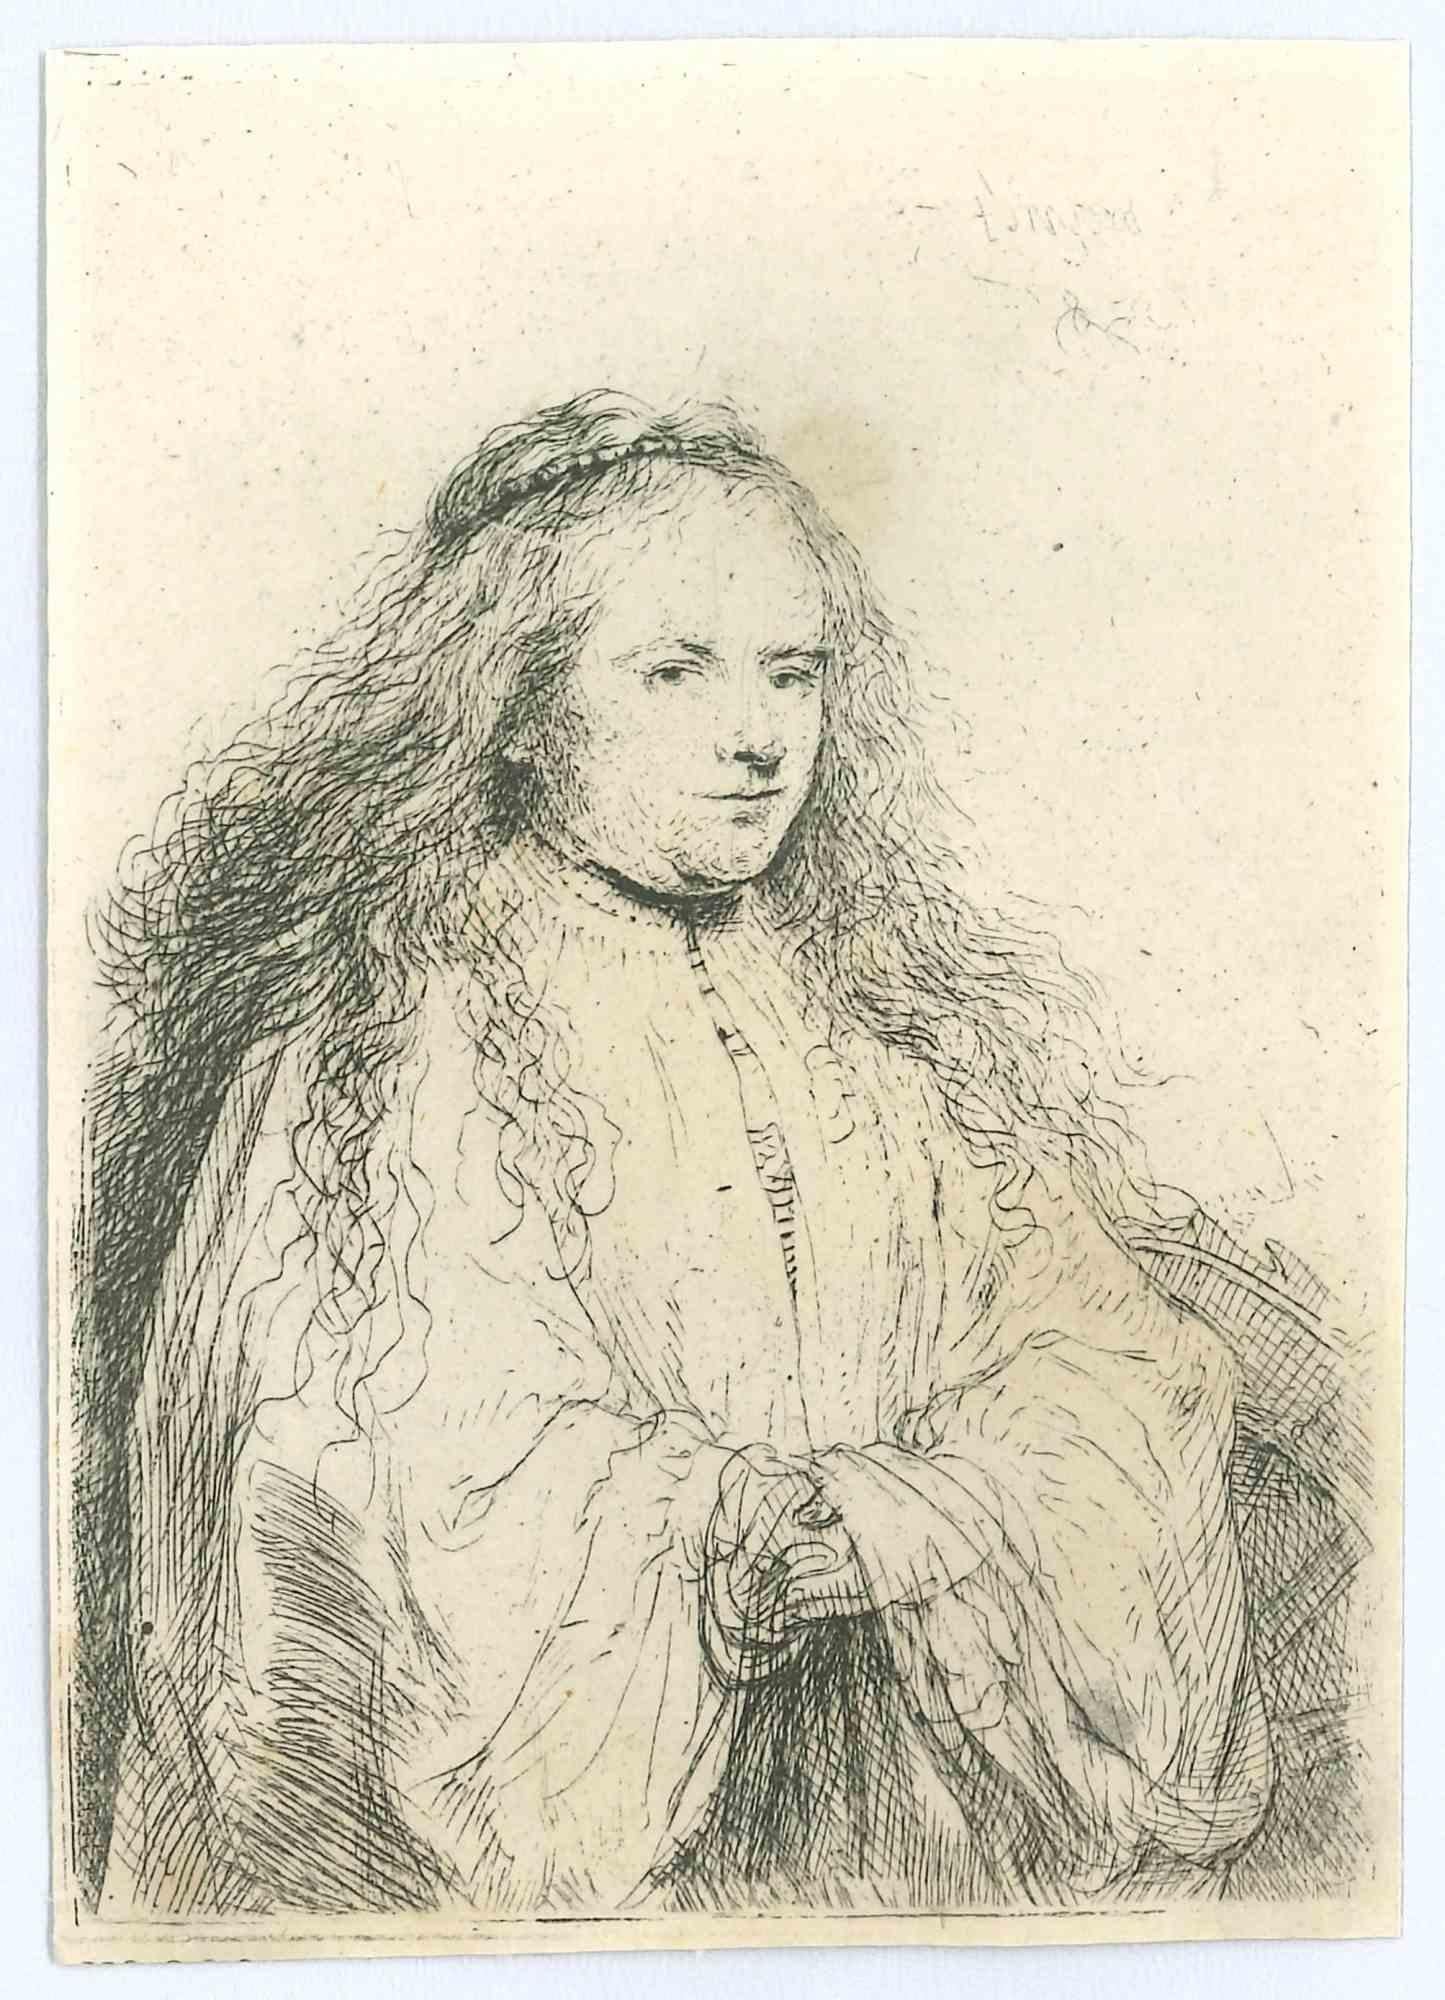 (After) Rembrandt van Rijn  Figurative Print - The Little Jewish Bride - Etching after Rembrandt - 19th Century